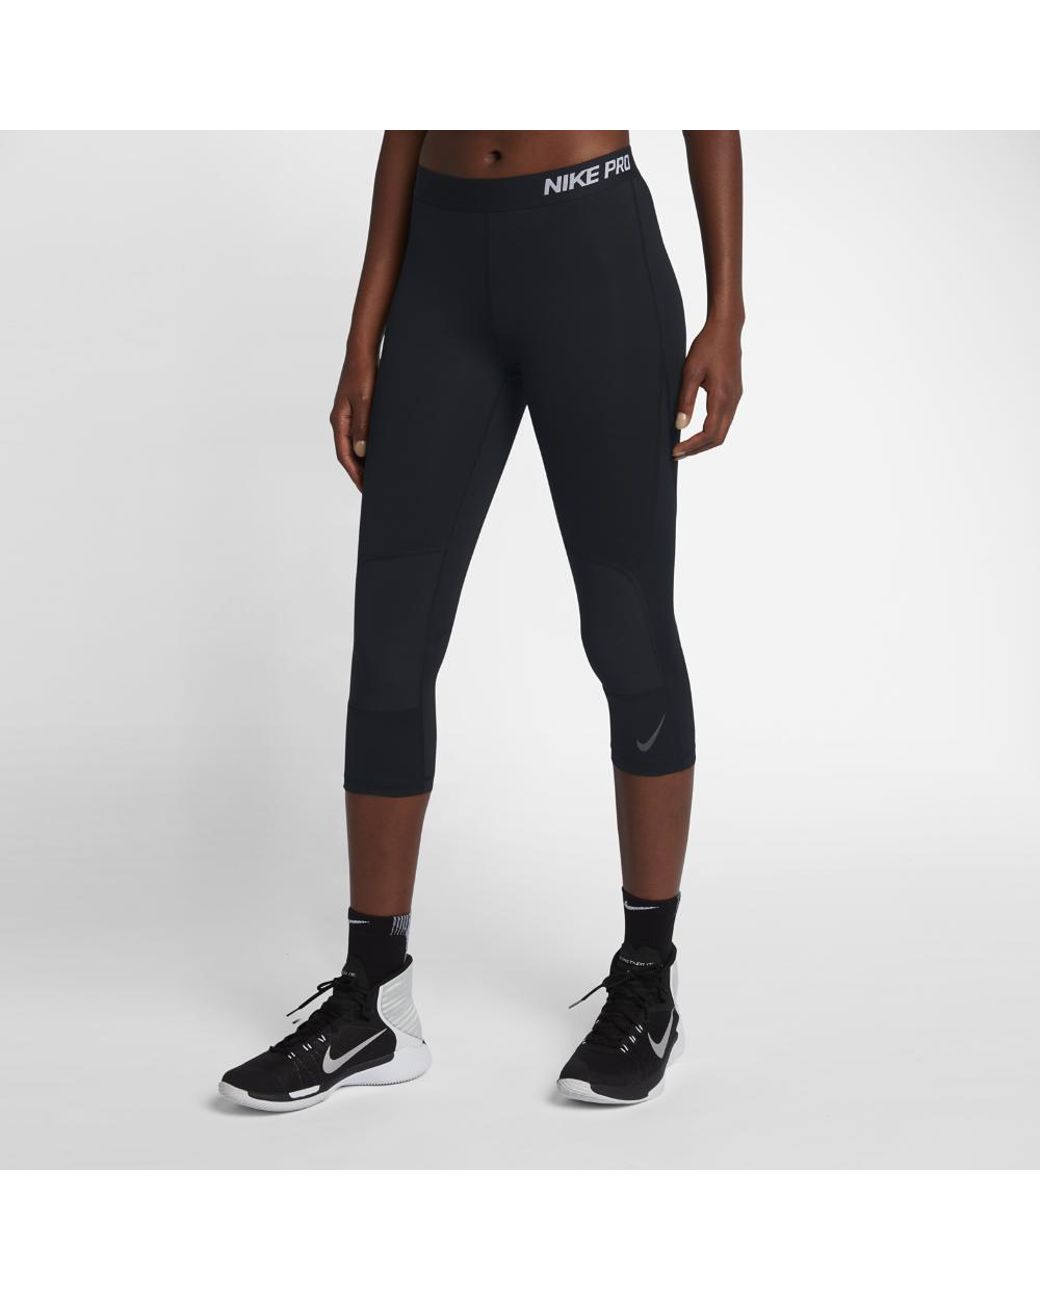 Nike Pro Women's Basketball Tights in Black | Lyst